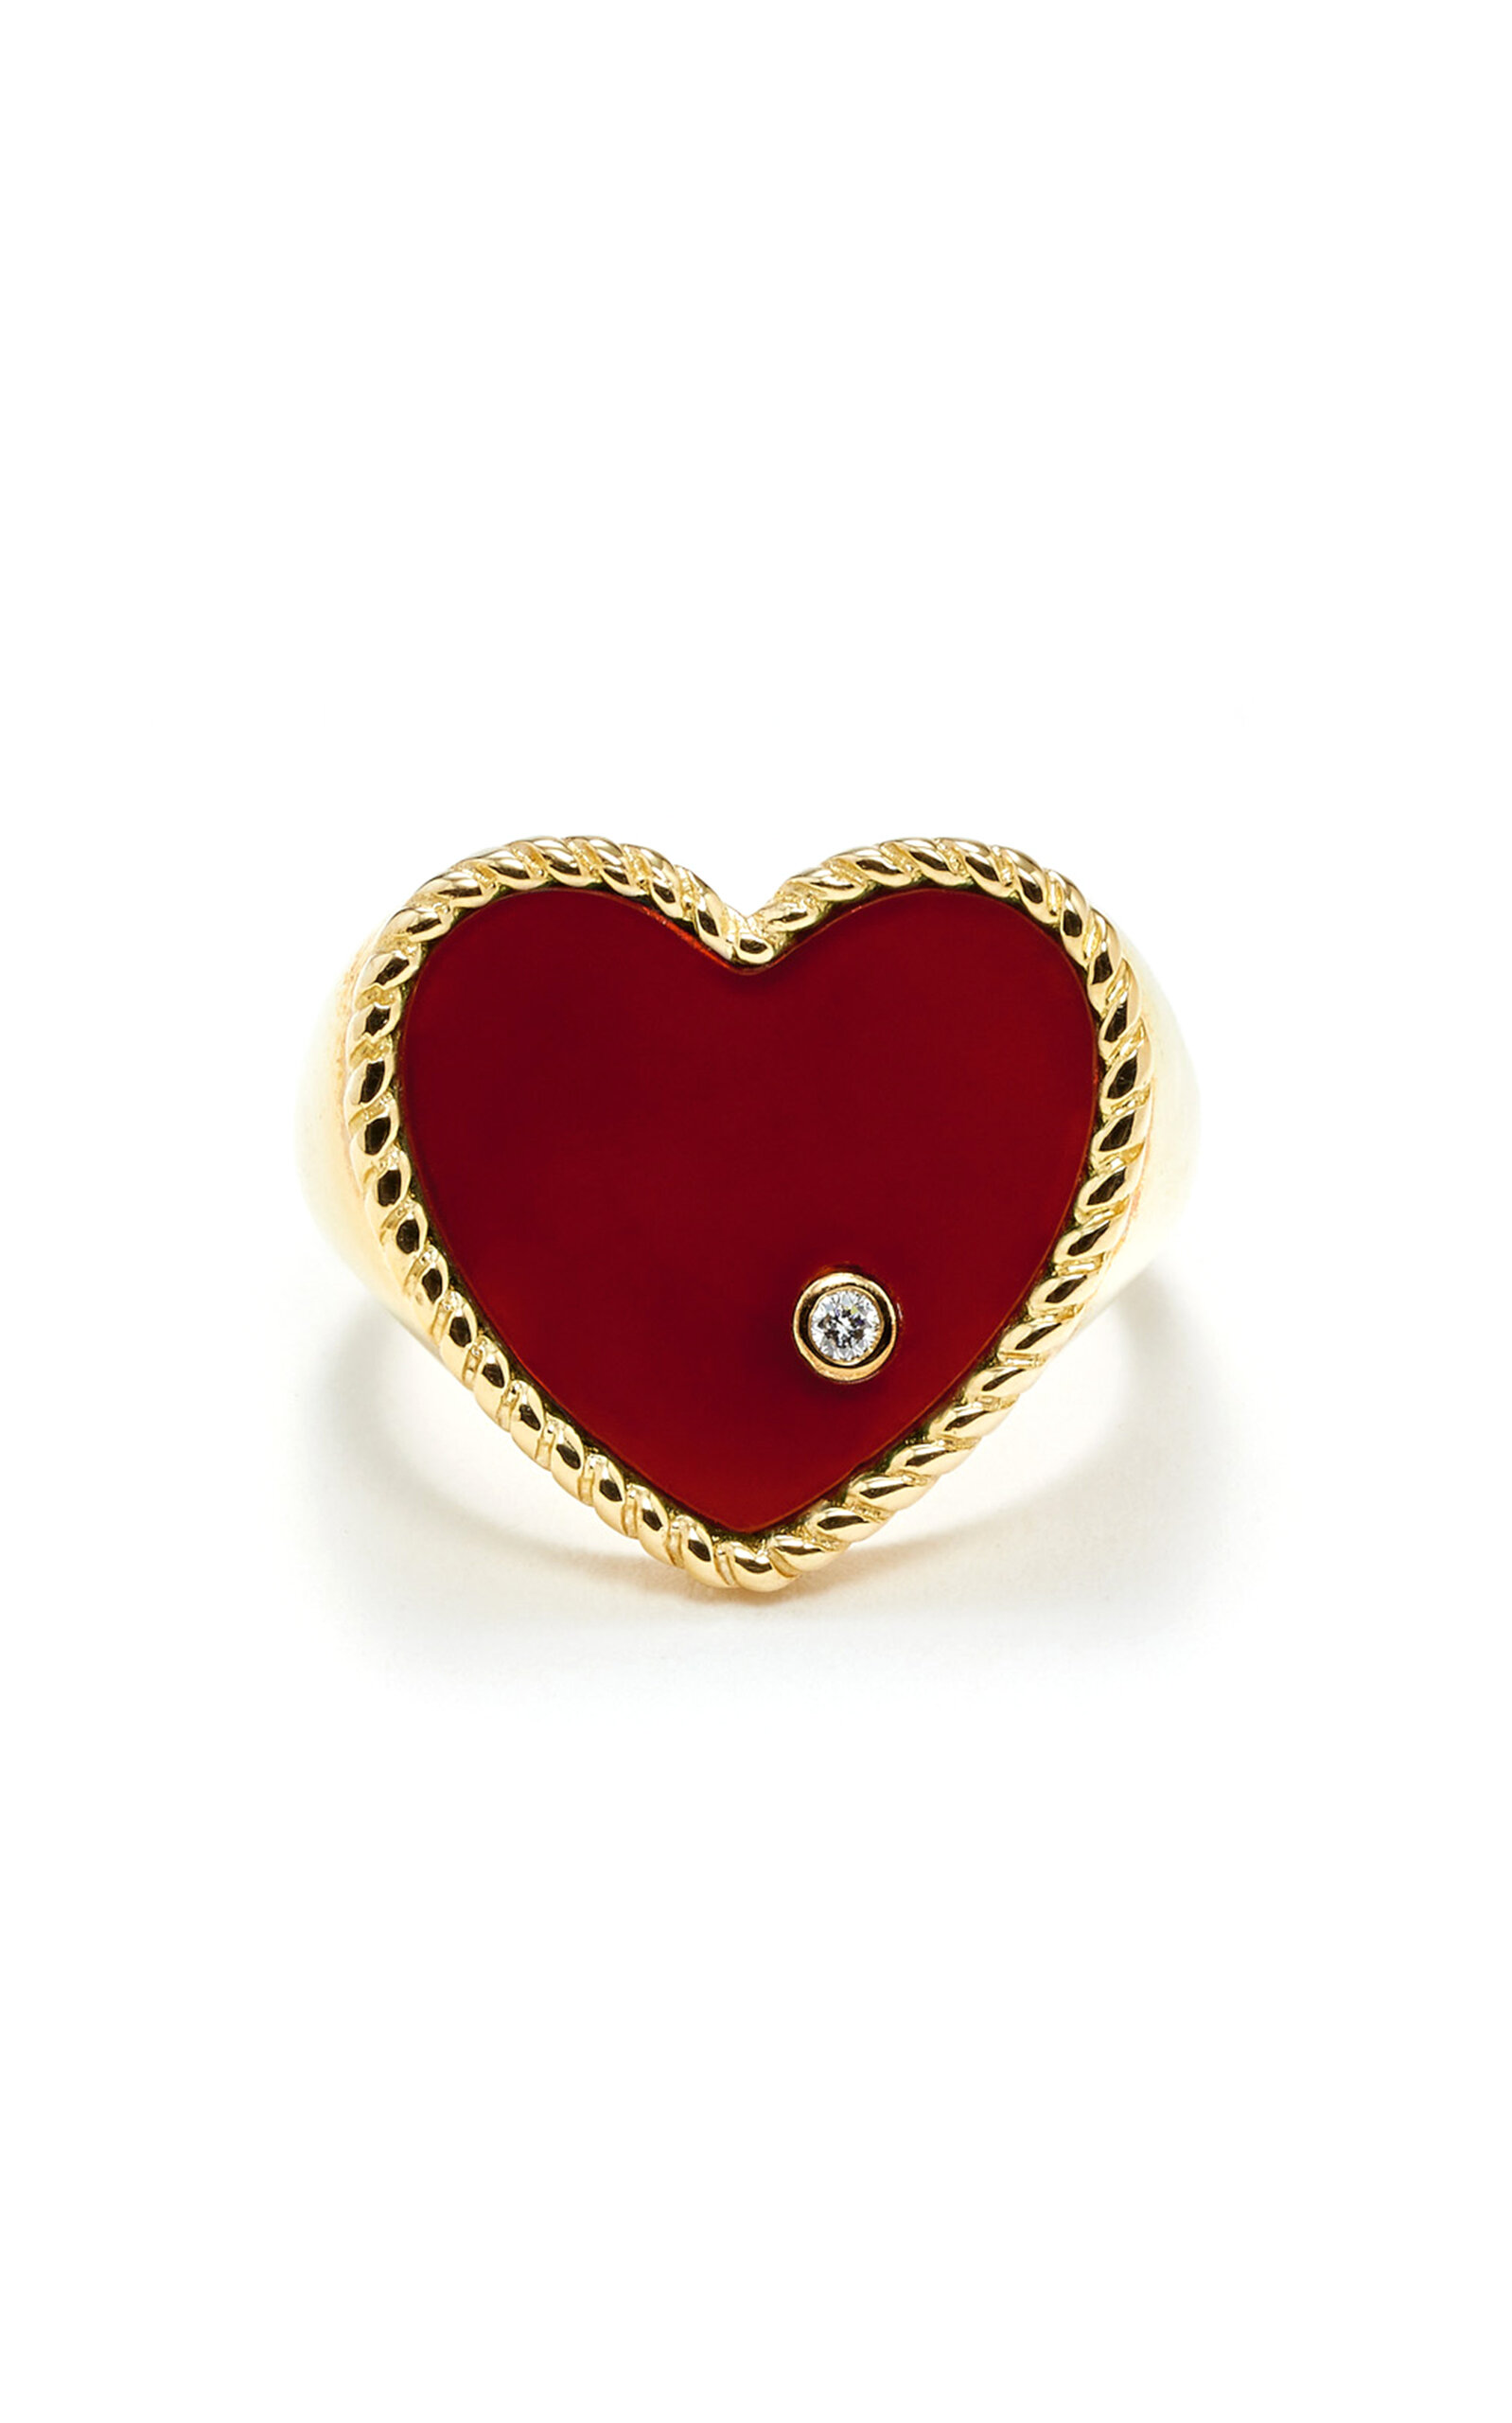 Yvonne Leon Women's 9K Yellow Gold Red Agate Heart Signet Ring